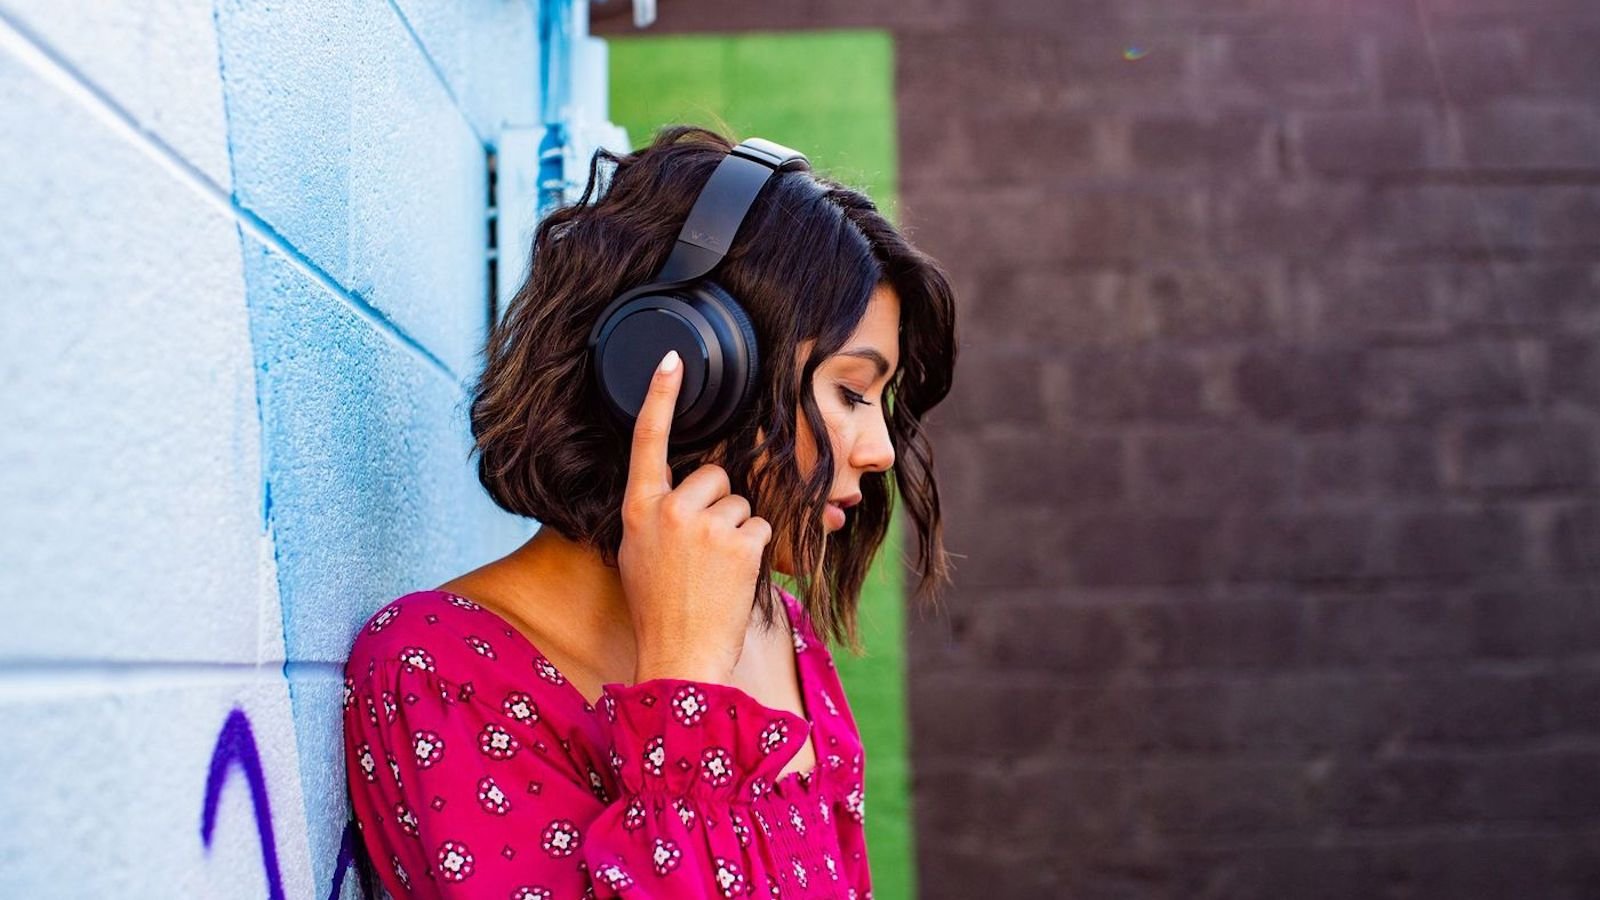 Wyze Headphones have a hybrid active-noise cancelation